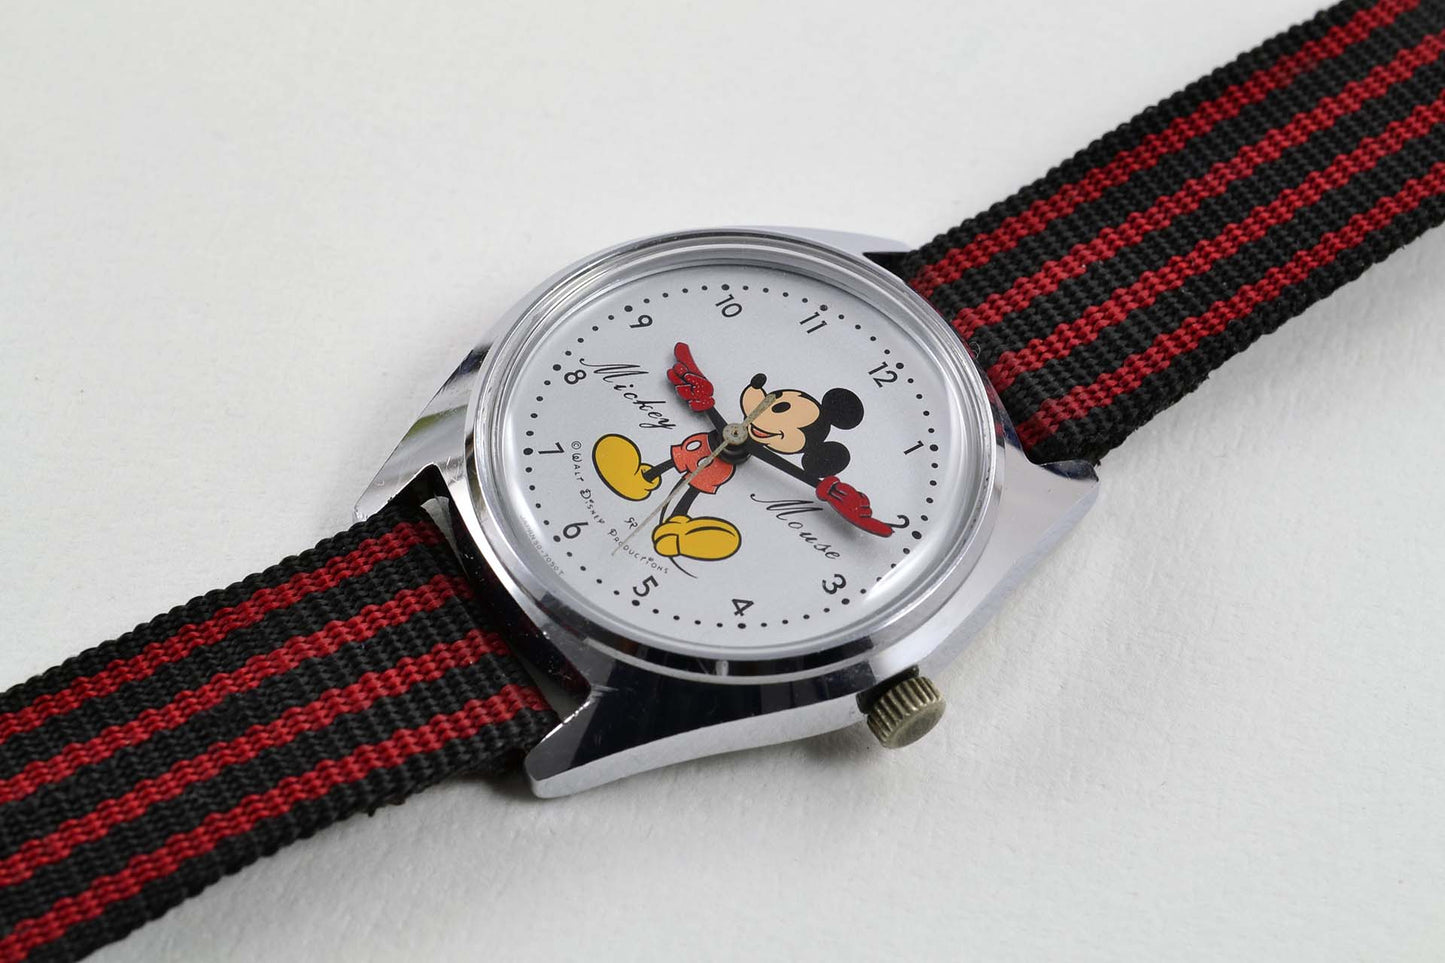 Seiko Mécanique Mickey Mouse Walt Disney vers 1970 - LumeVille